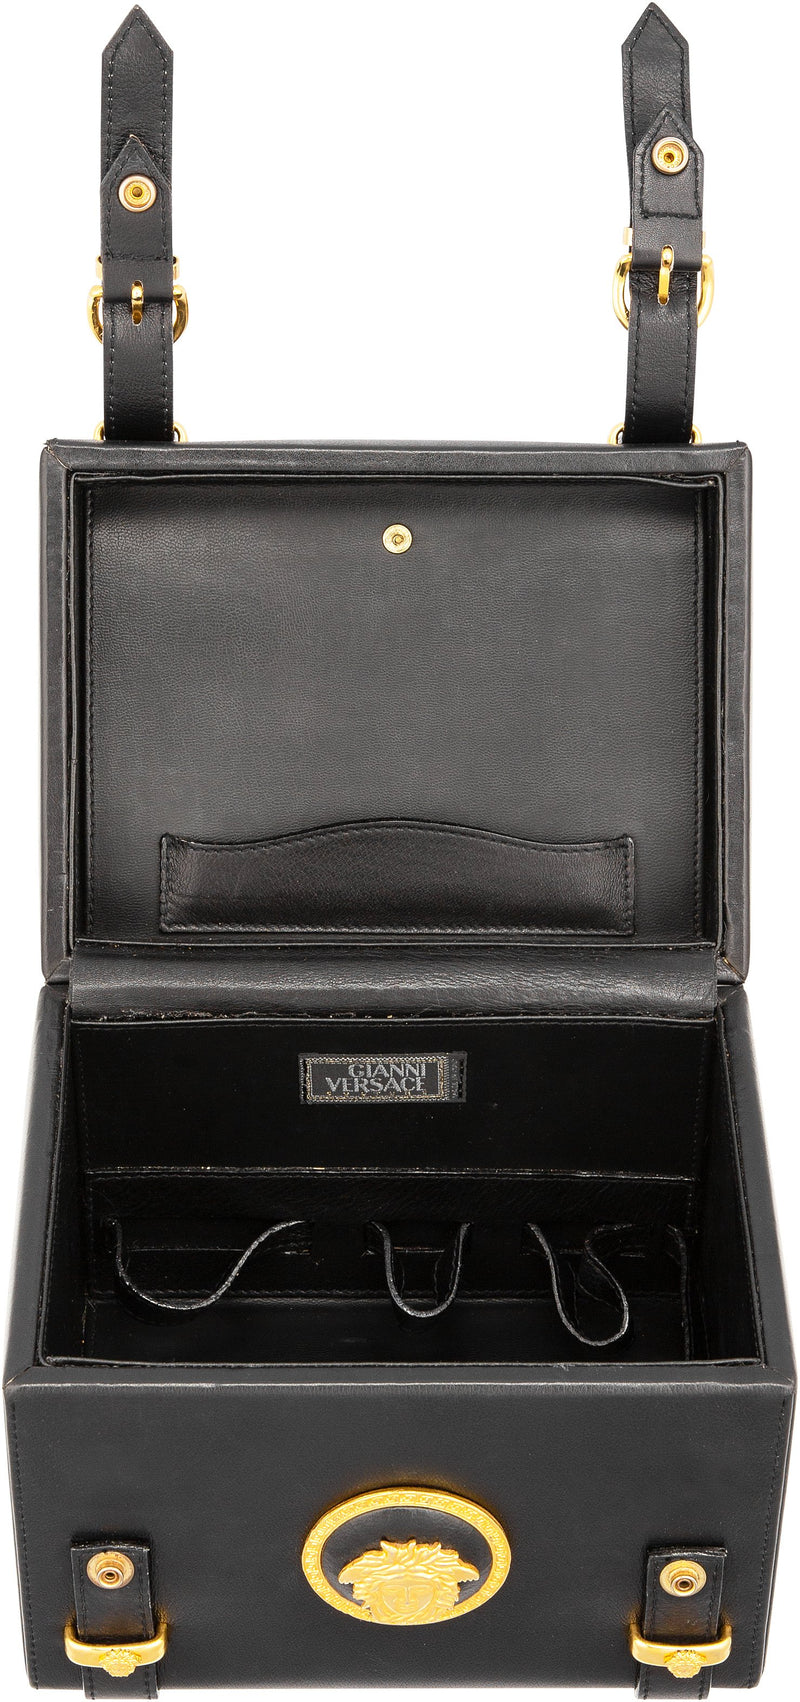 Gianni Versace Leather Medusa Box Bag